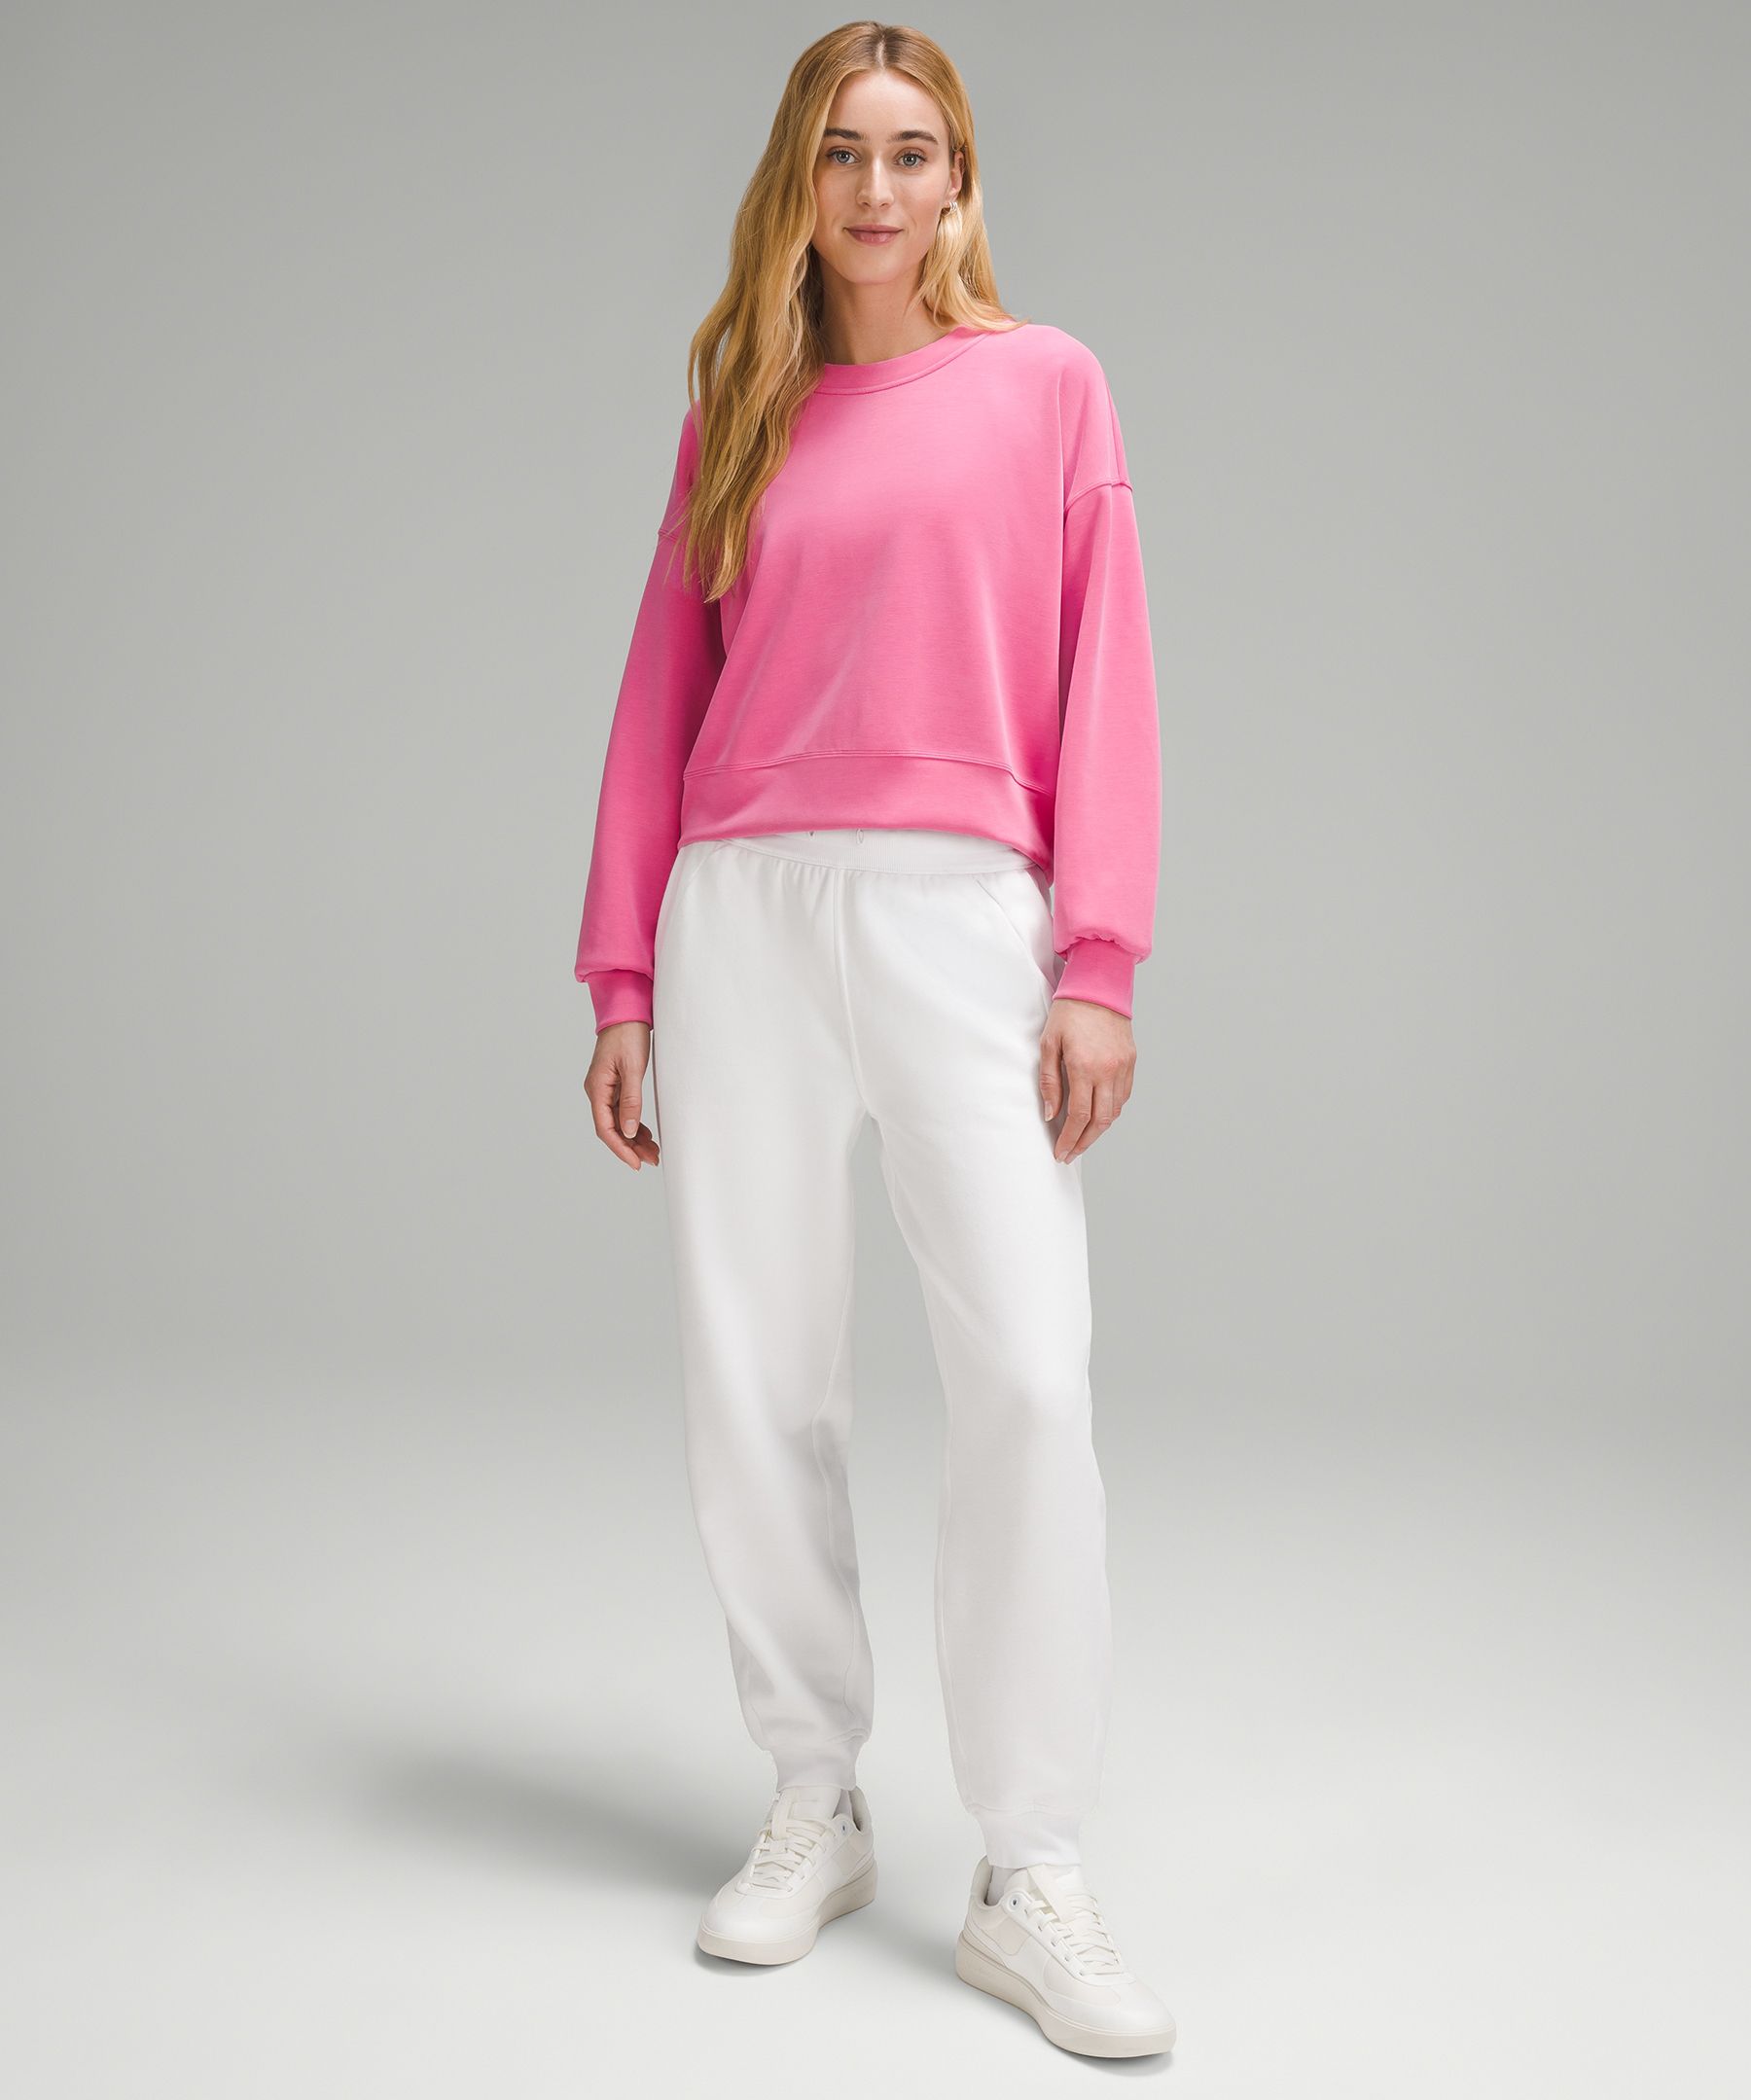 Lululemon Sweatshirt White Size 4 - $20 (83% Off Retail) - From